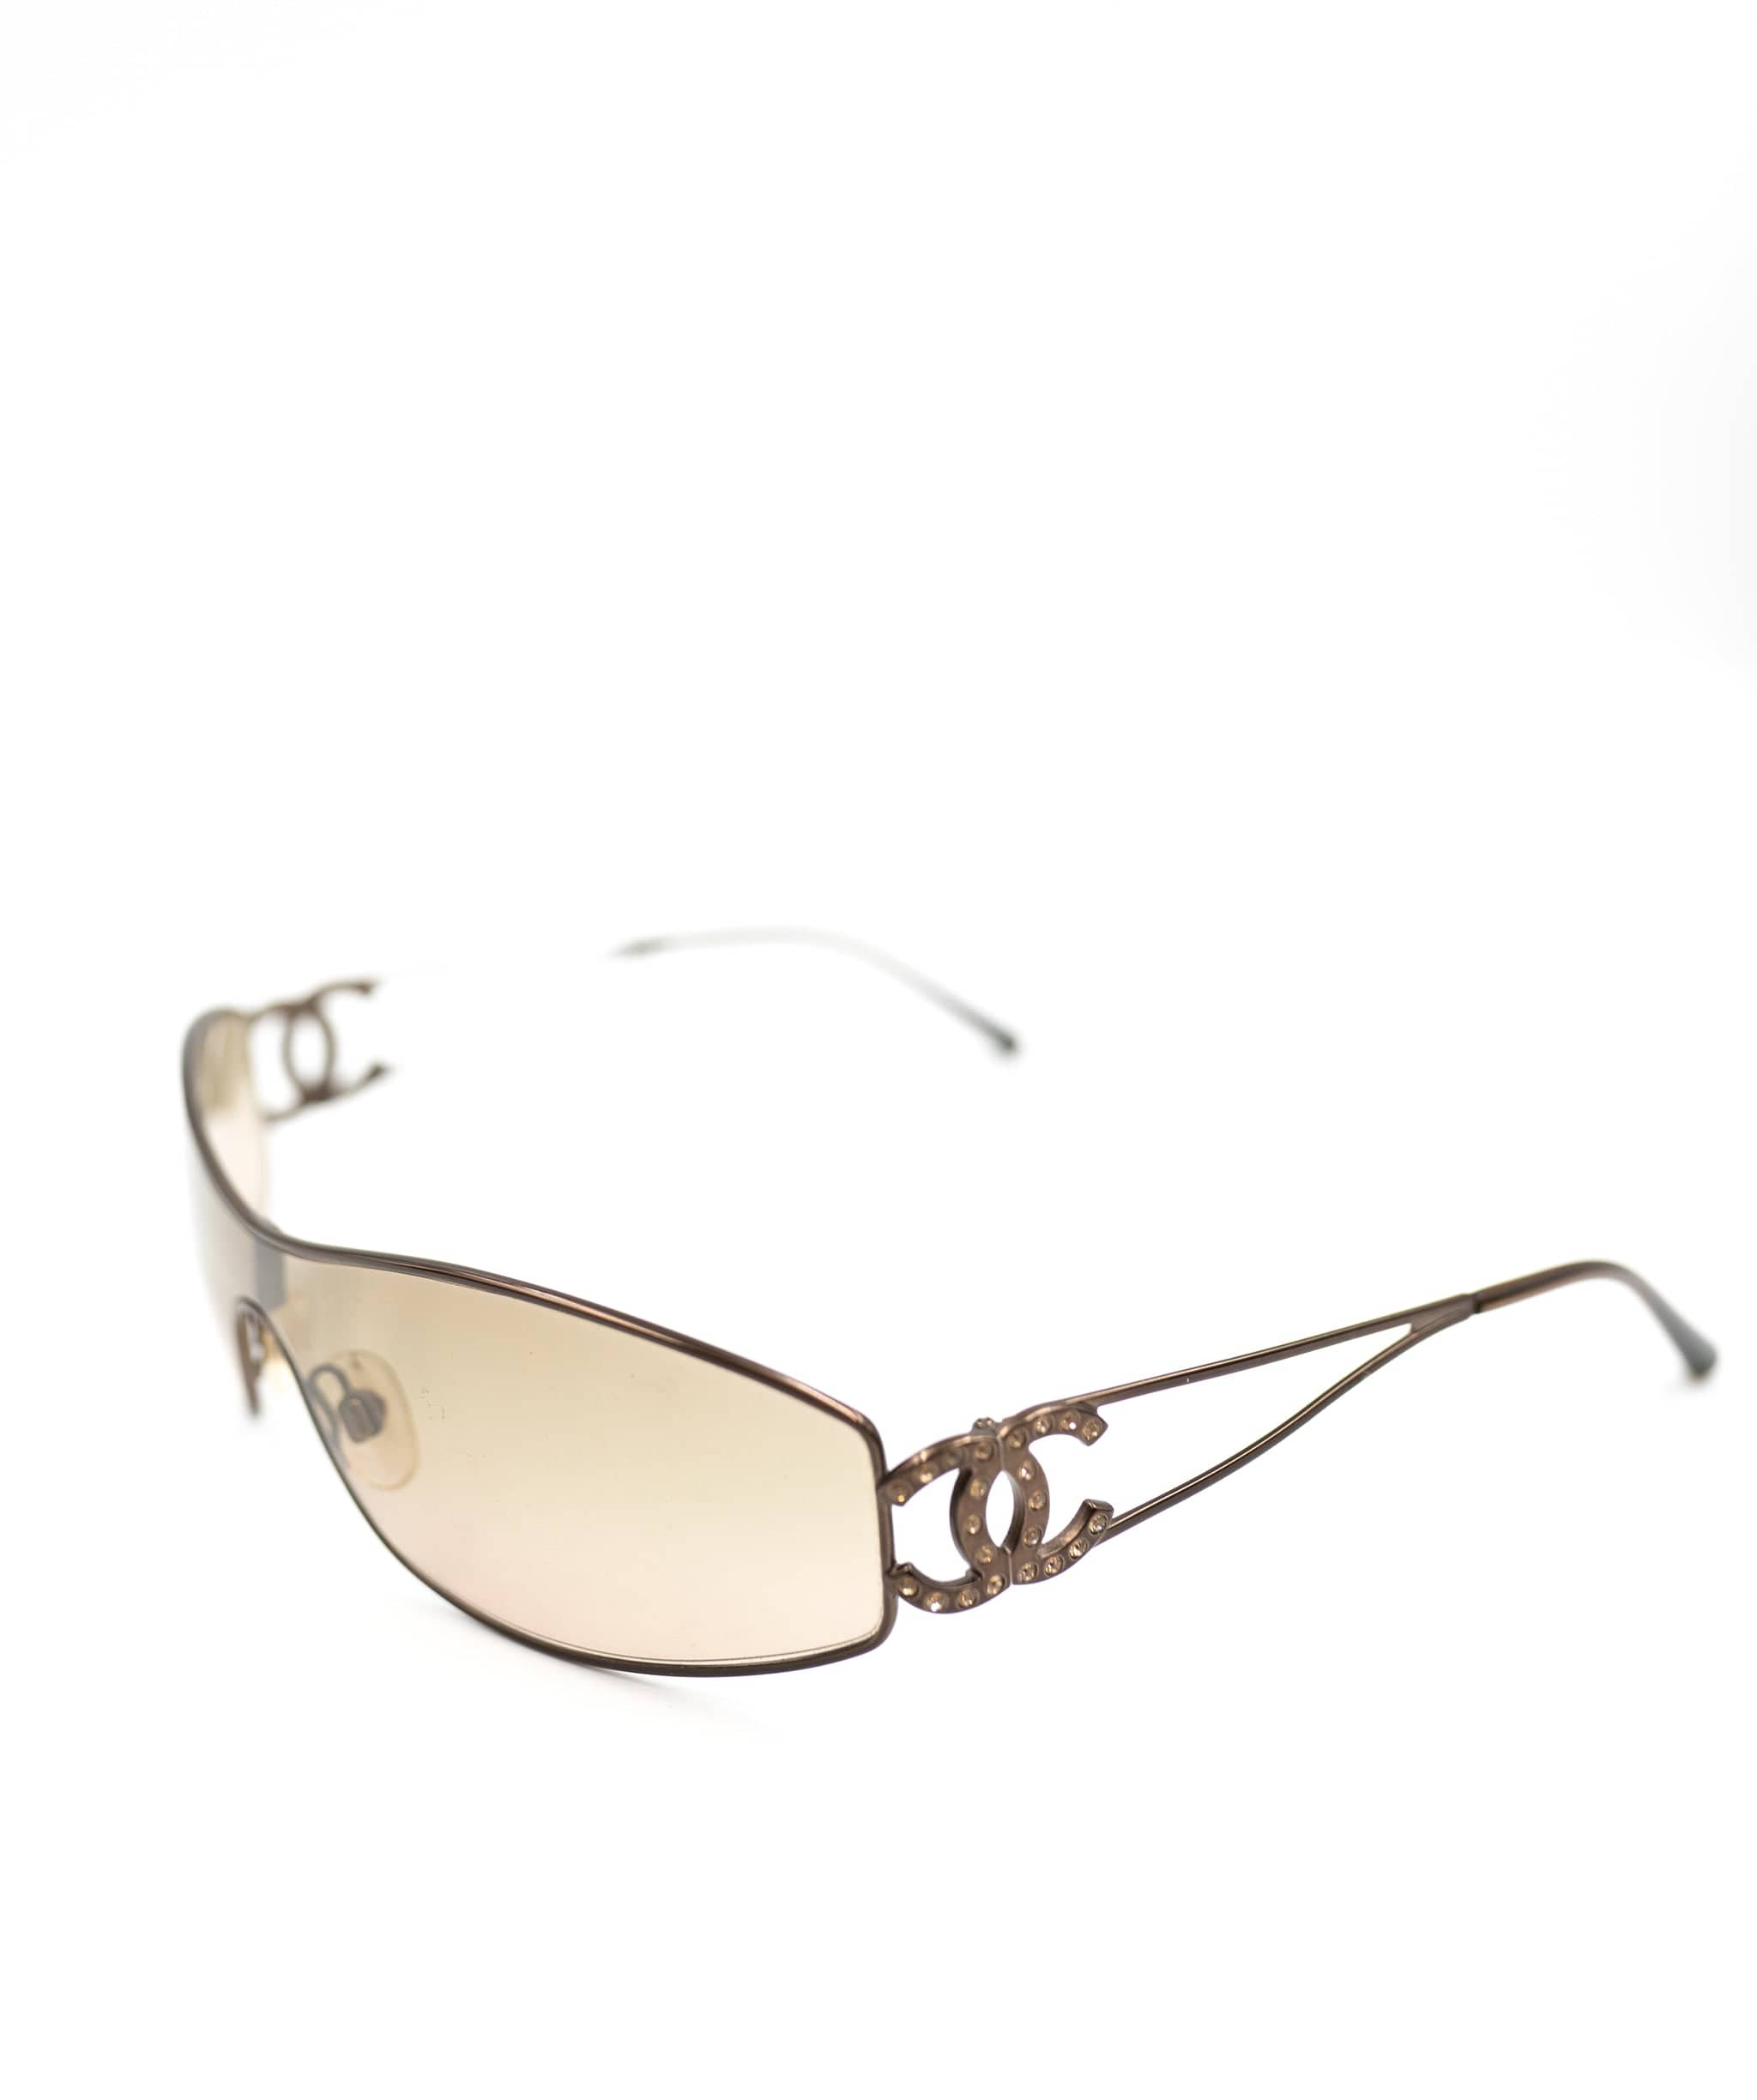 Chanel chanel sunglasses rhinestone ALL0105